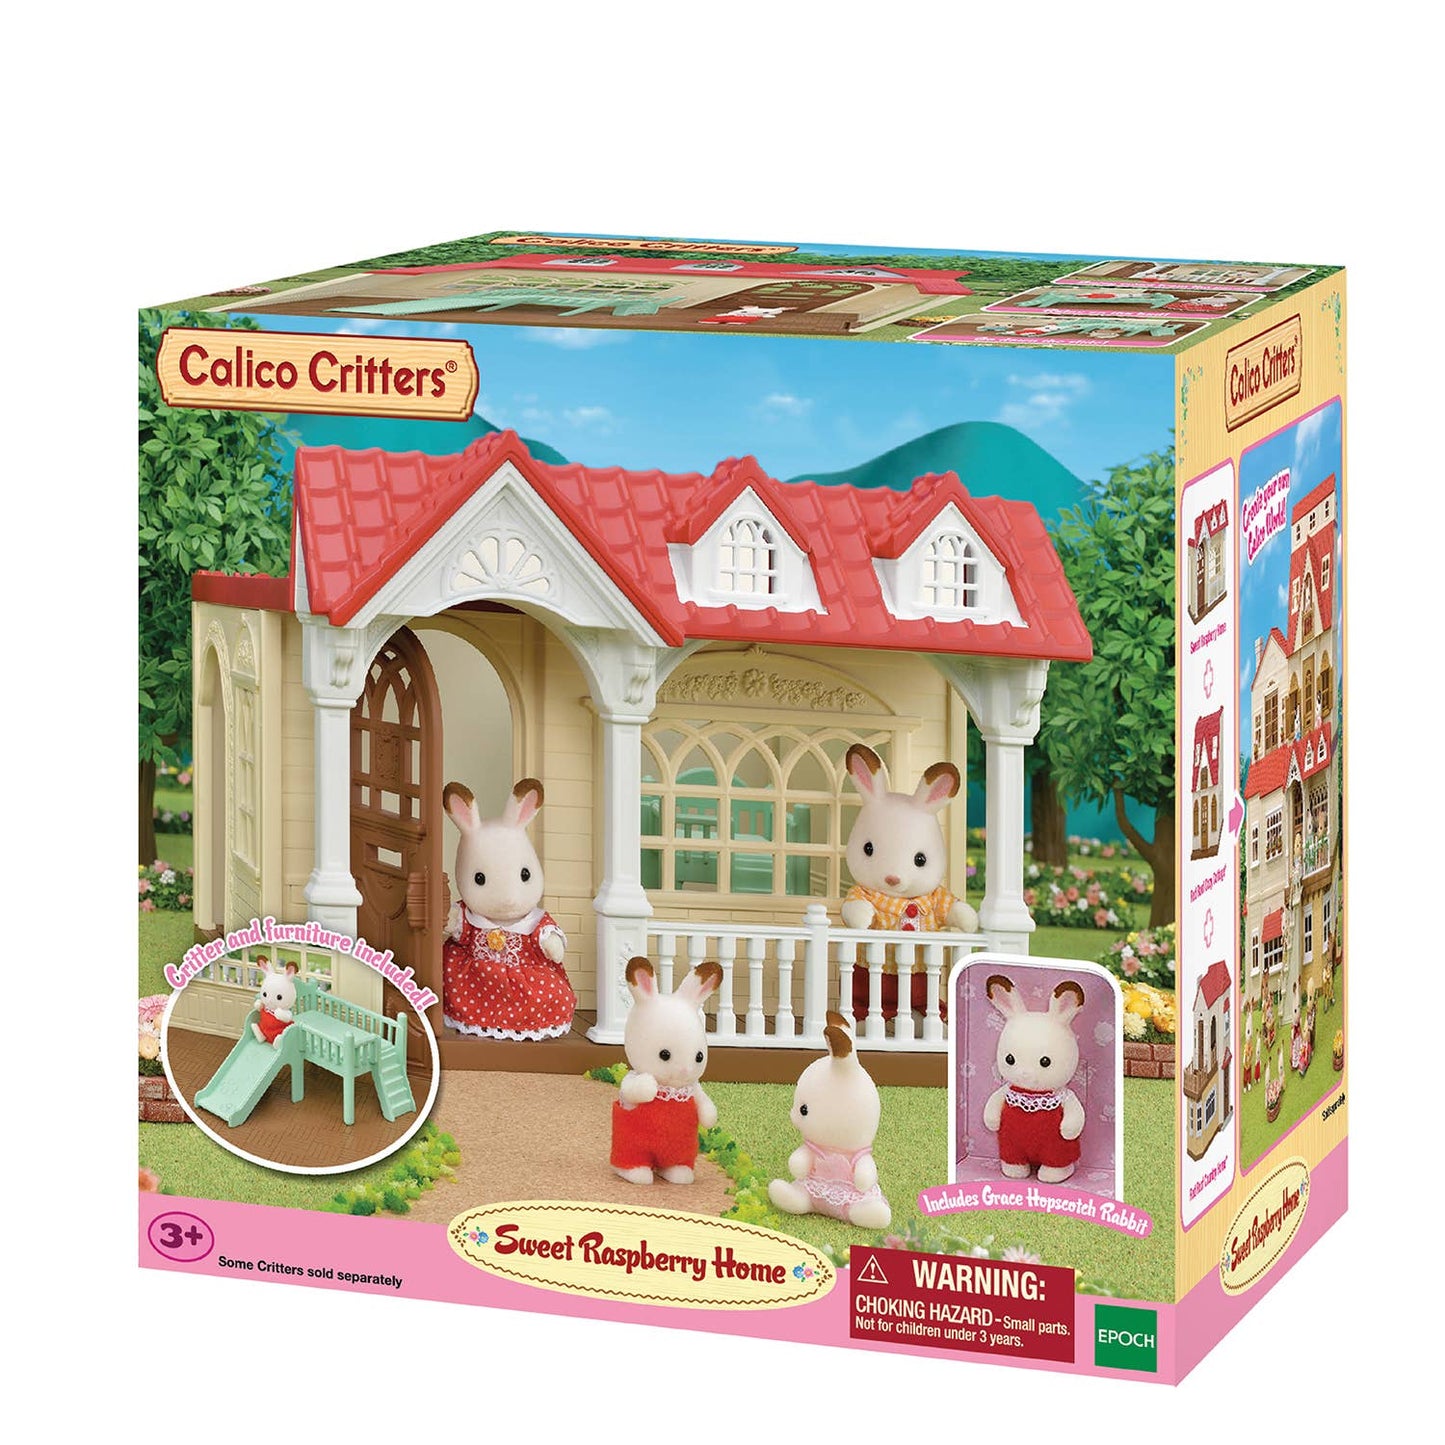 Dollhouse Sweet Raspberry Home Playset